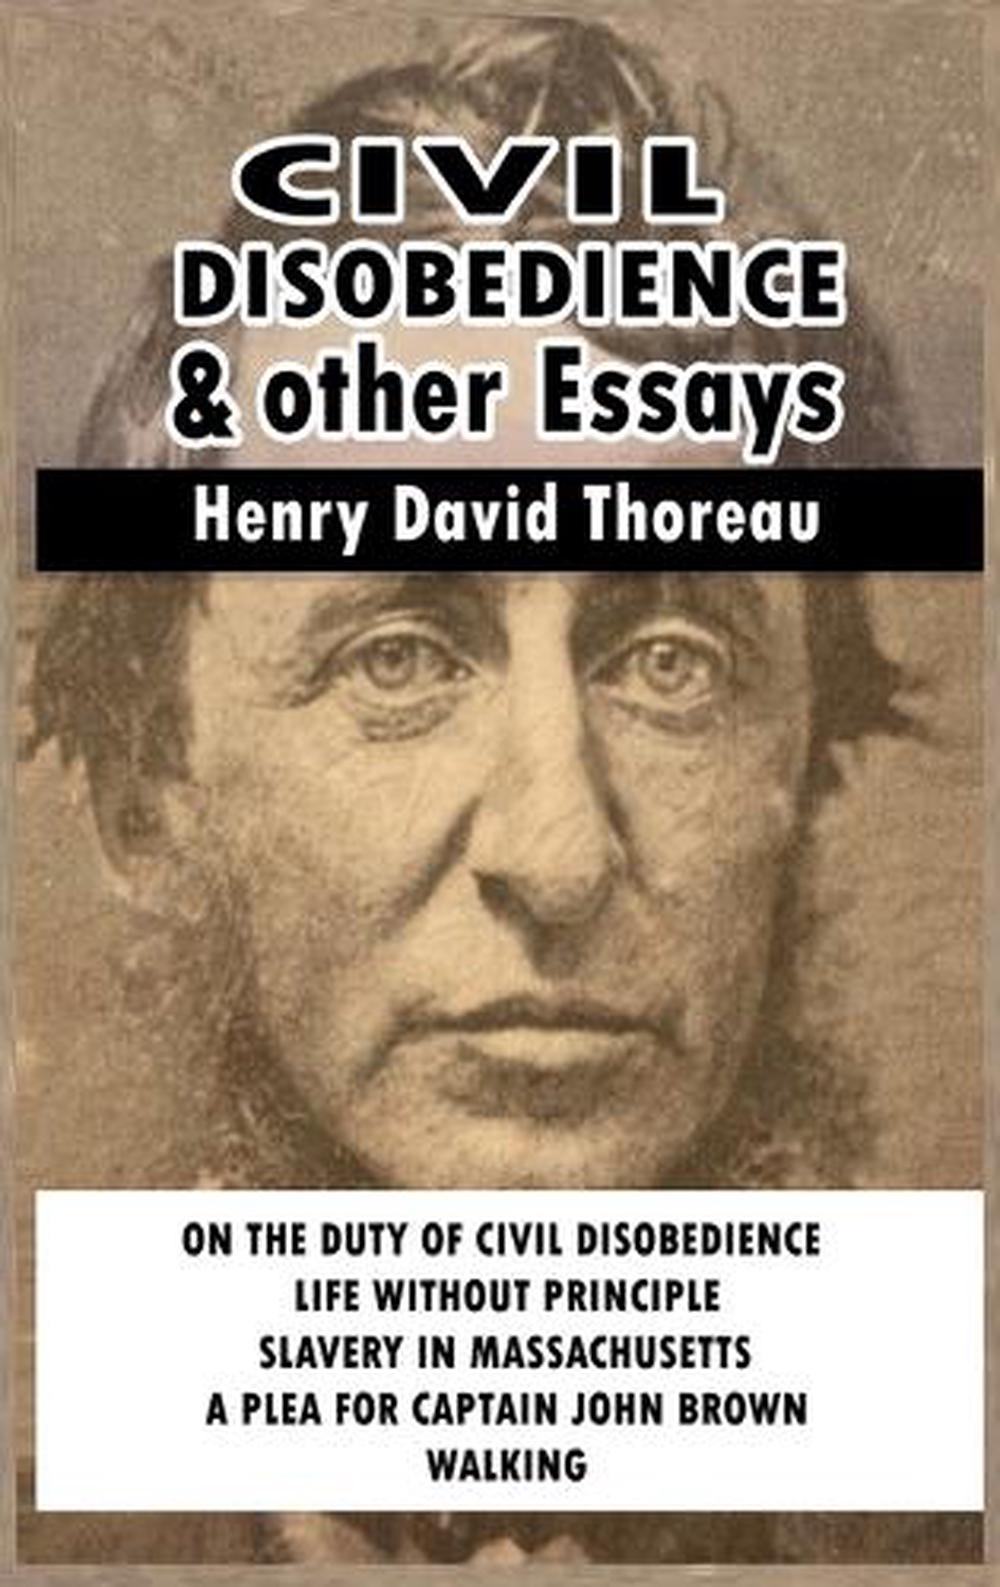 thoreau civil disobedience essay summary